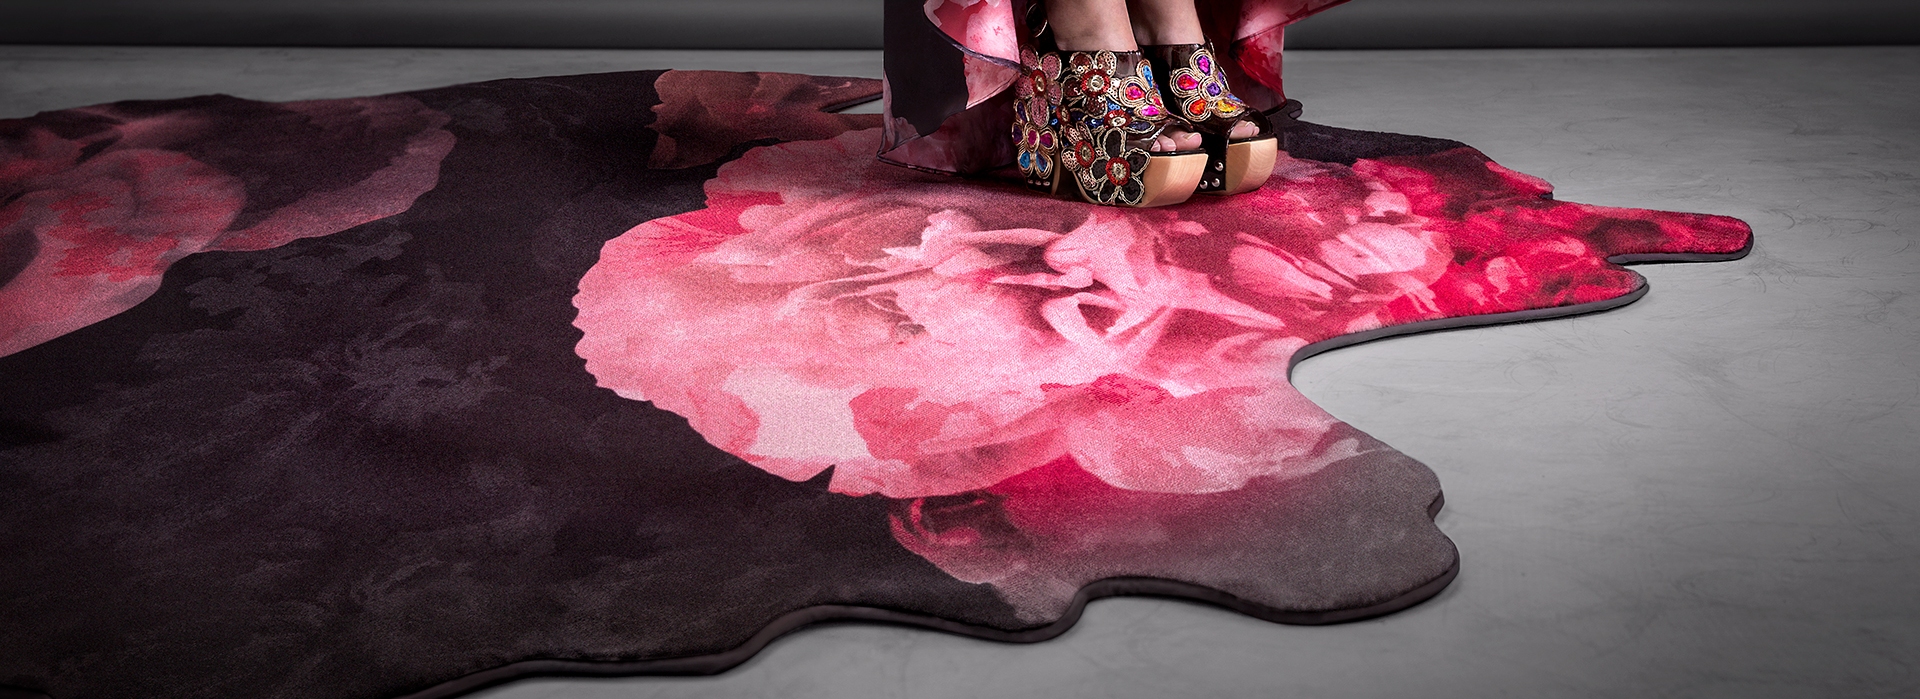 krokodil Vergevingsgezind Gezag Printkarpet naar eigen ontwerp | Carpet Making